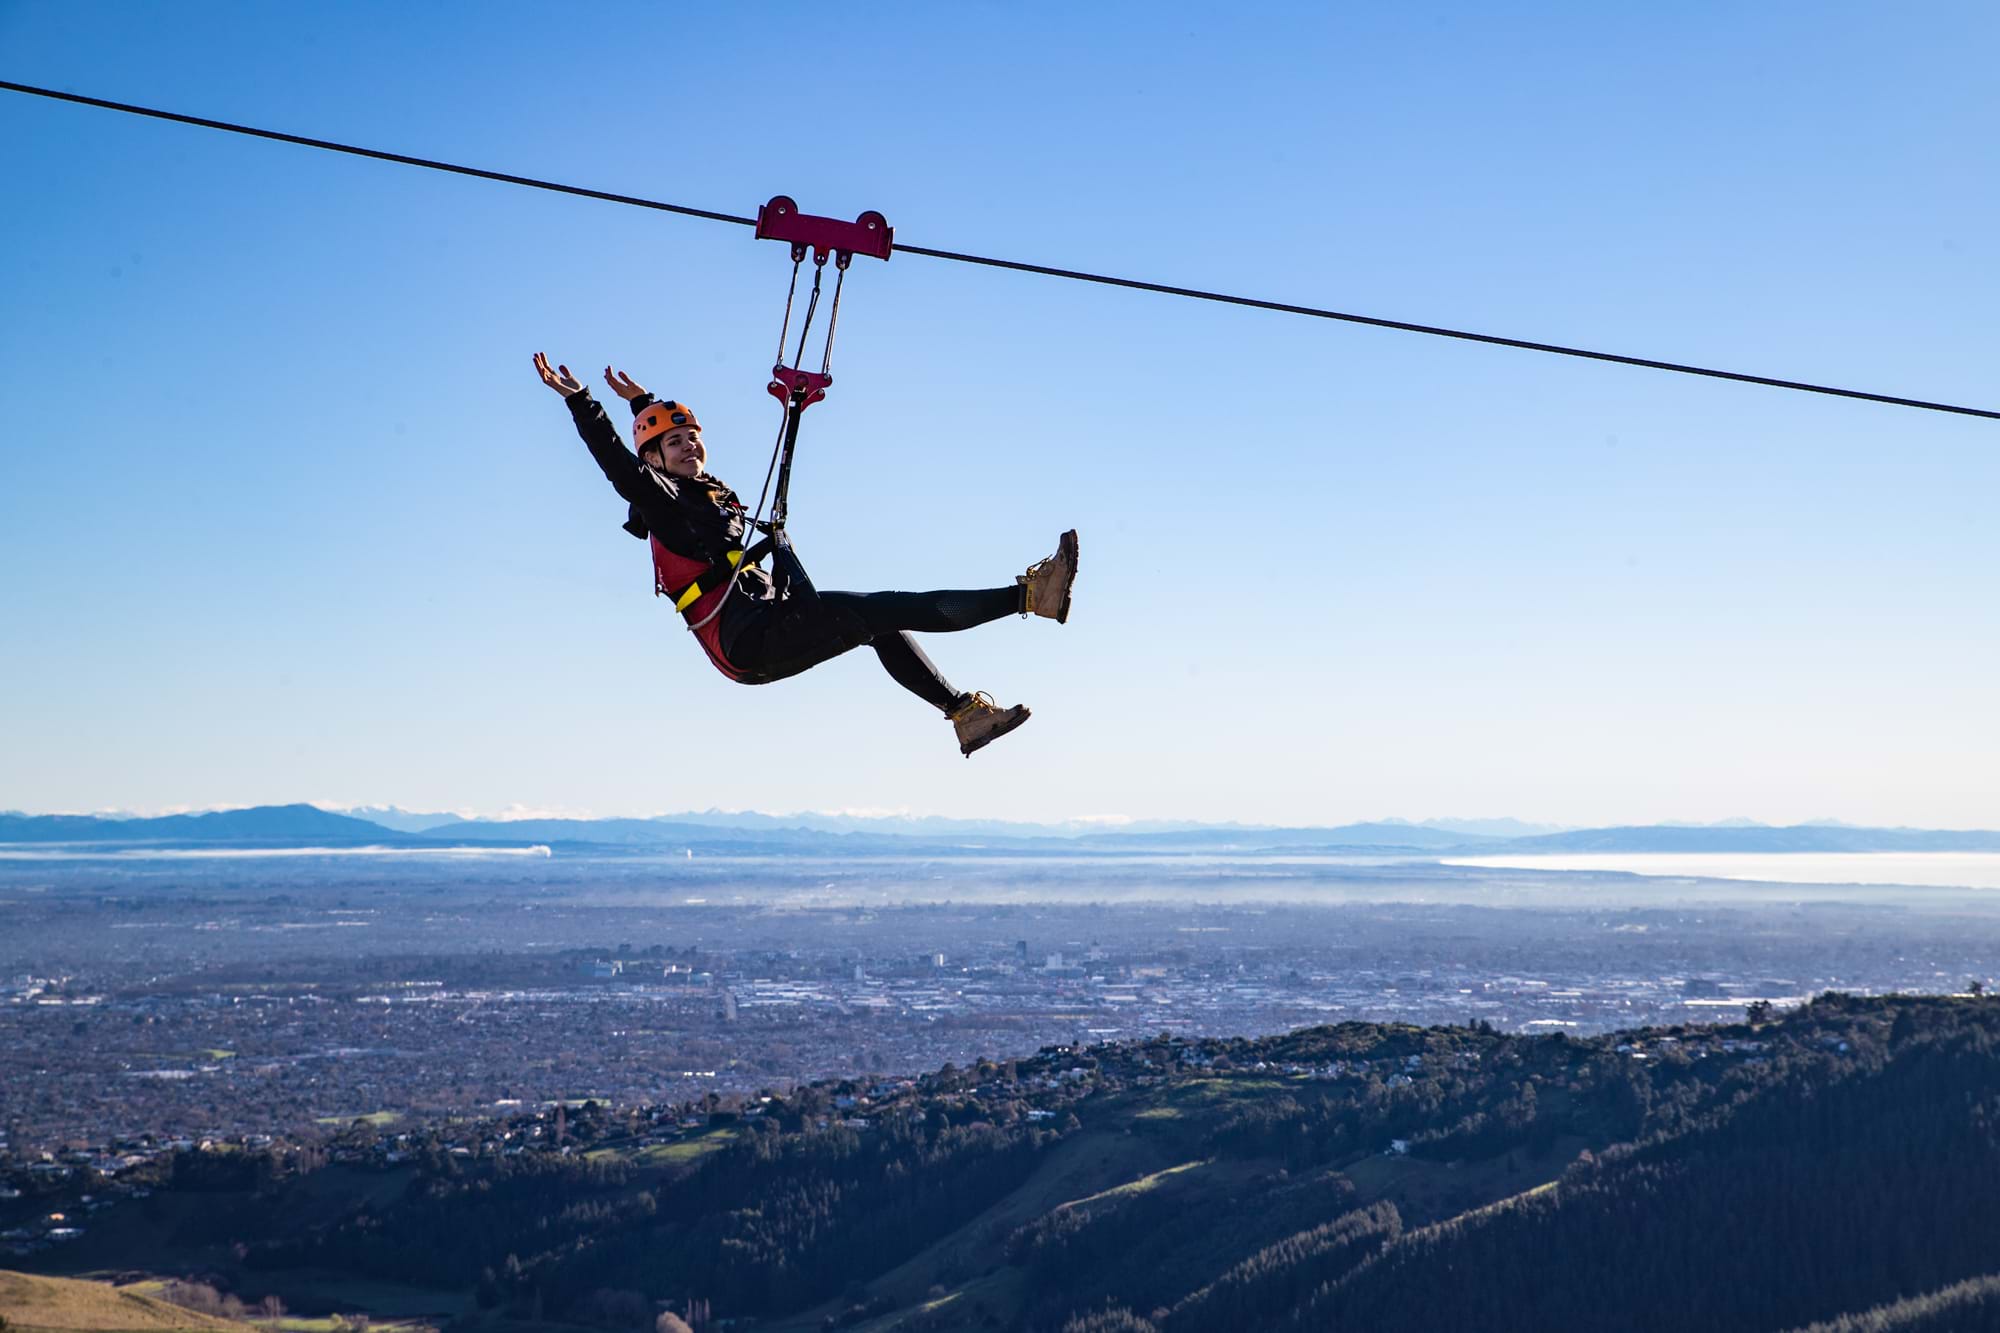 Ziplining at Christchurch Adventure Park